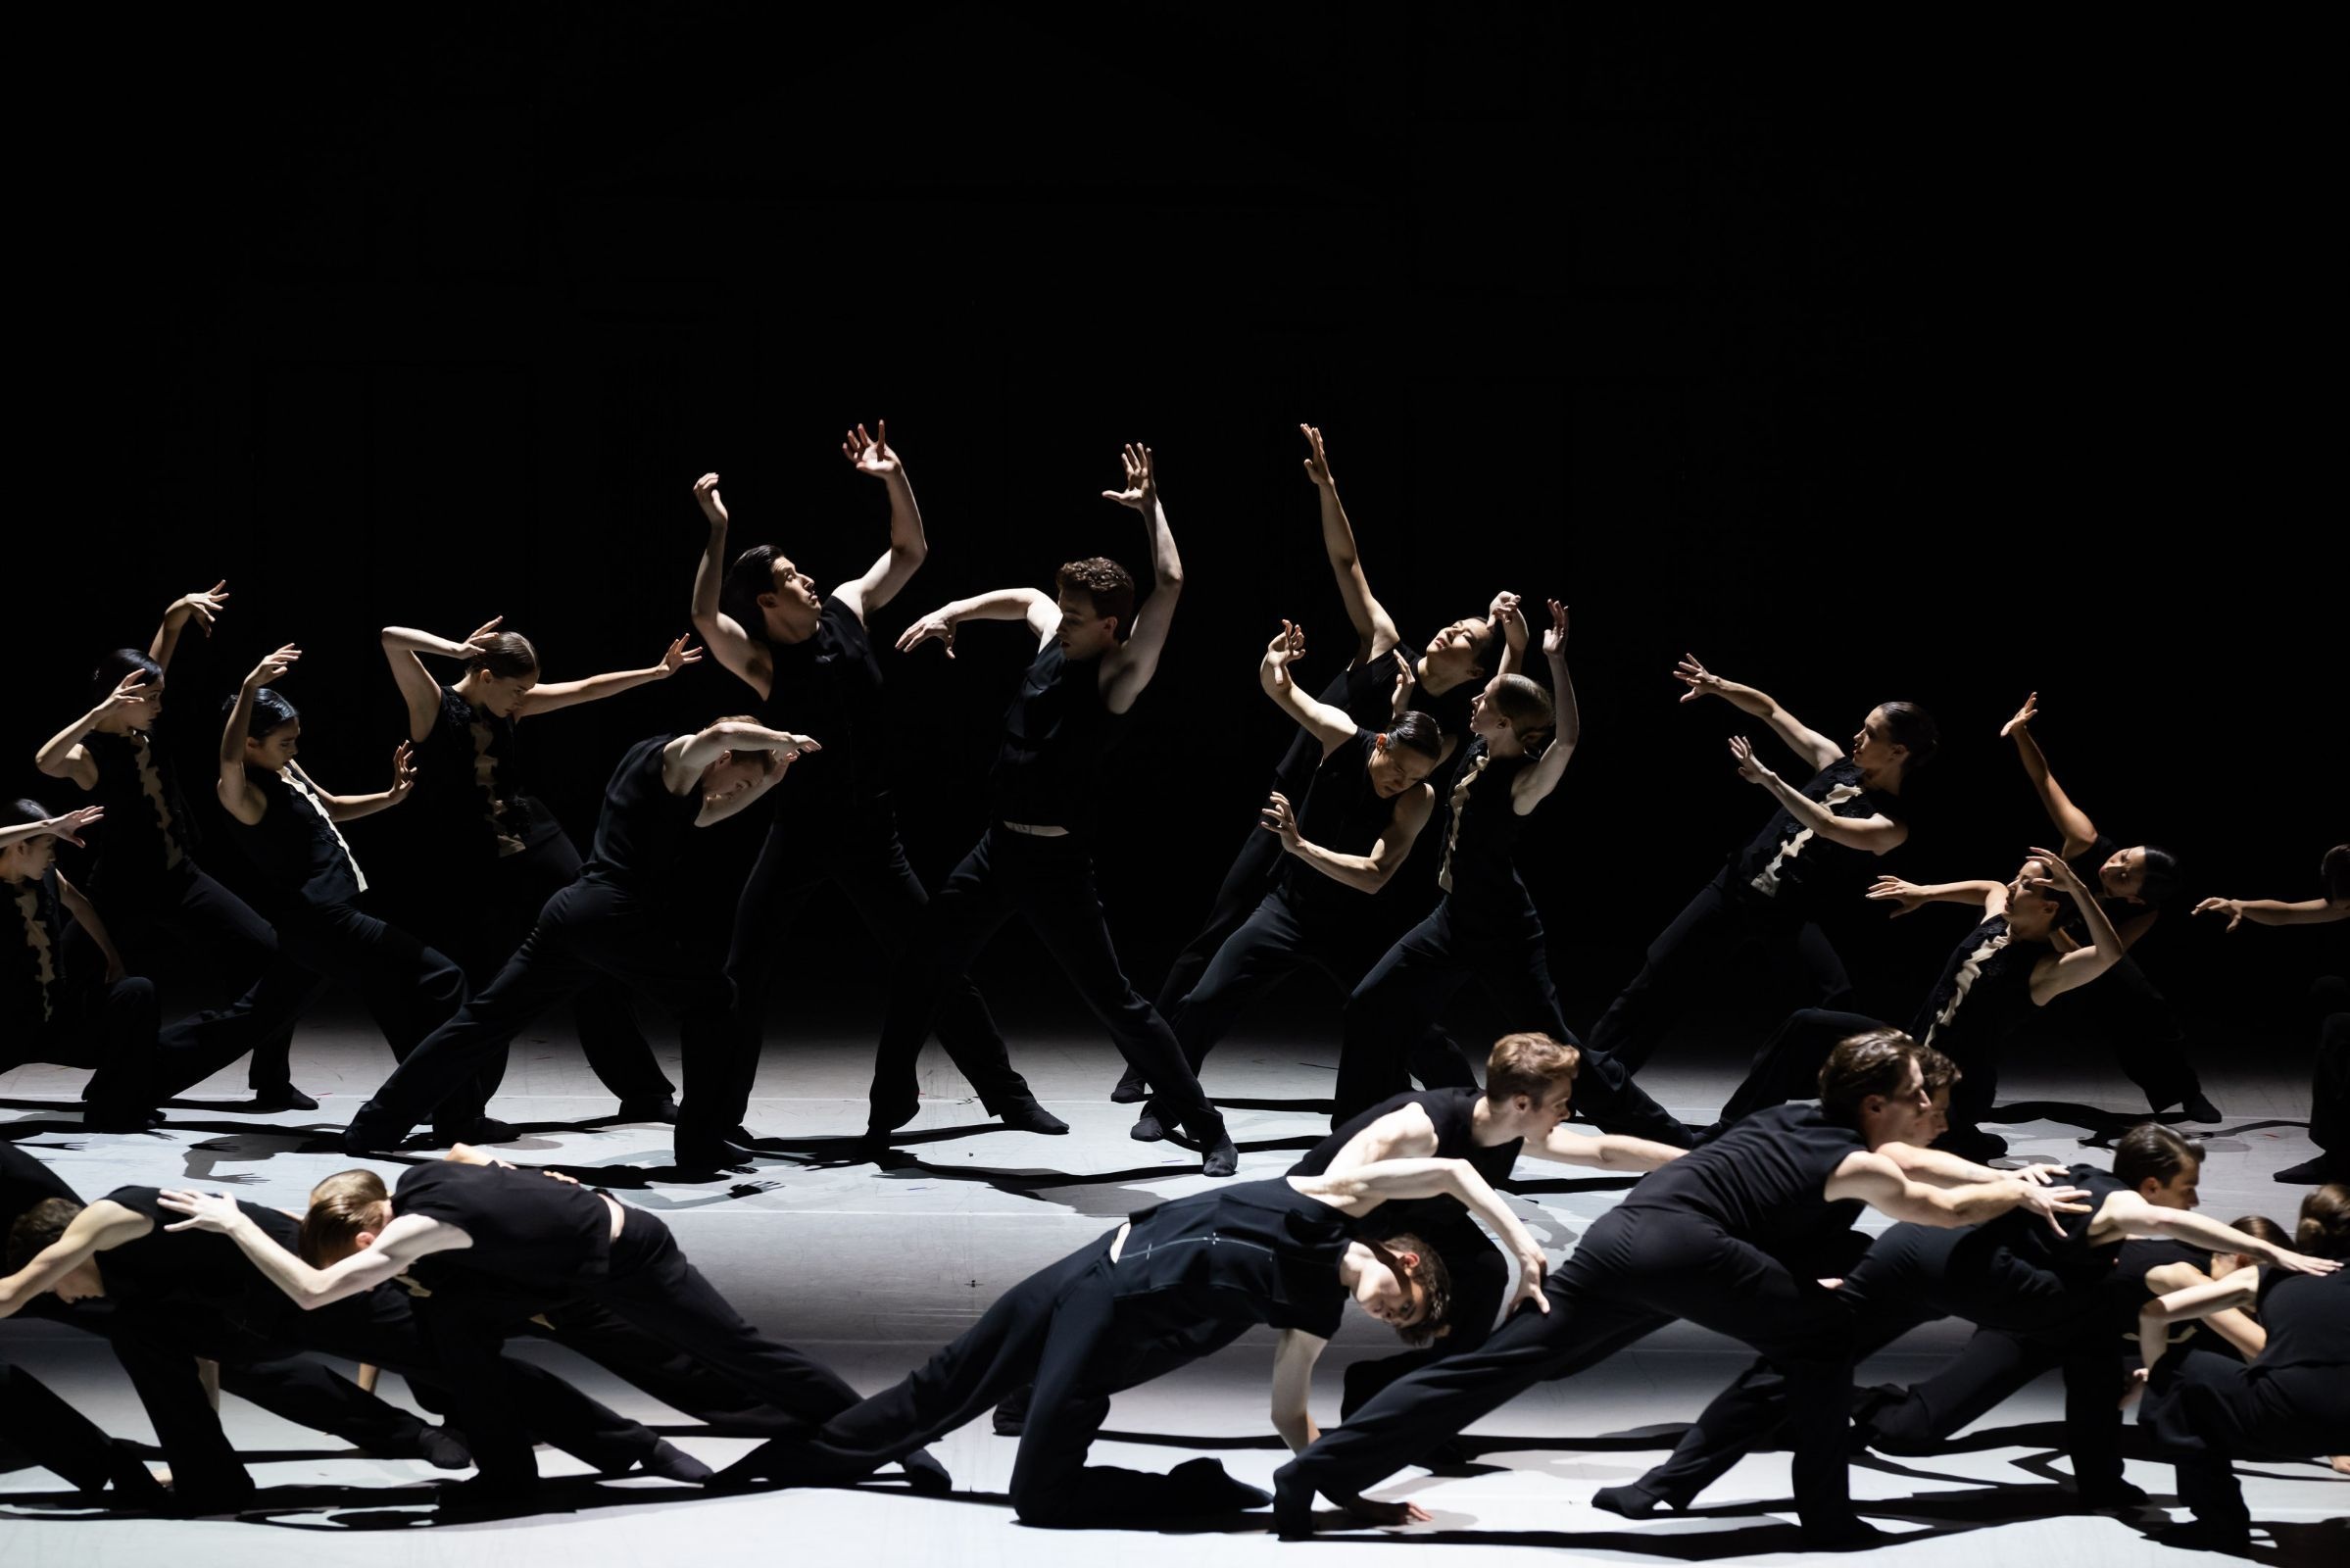 Contemporary Dance: The Australian Ballet, “Beautiful monster”, Dance perfection, The choreography of Kunstkamer. 2400x1600 HD Wallpaper.